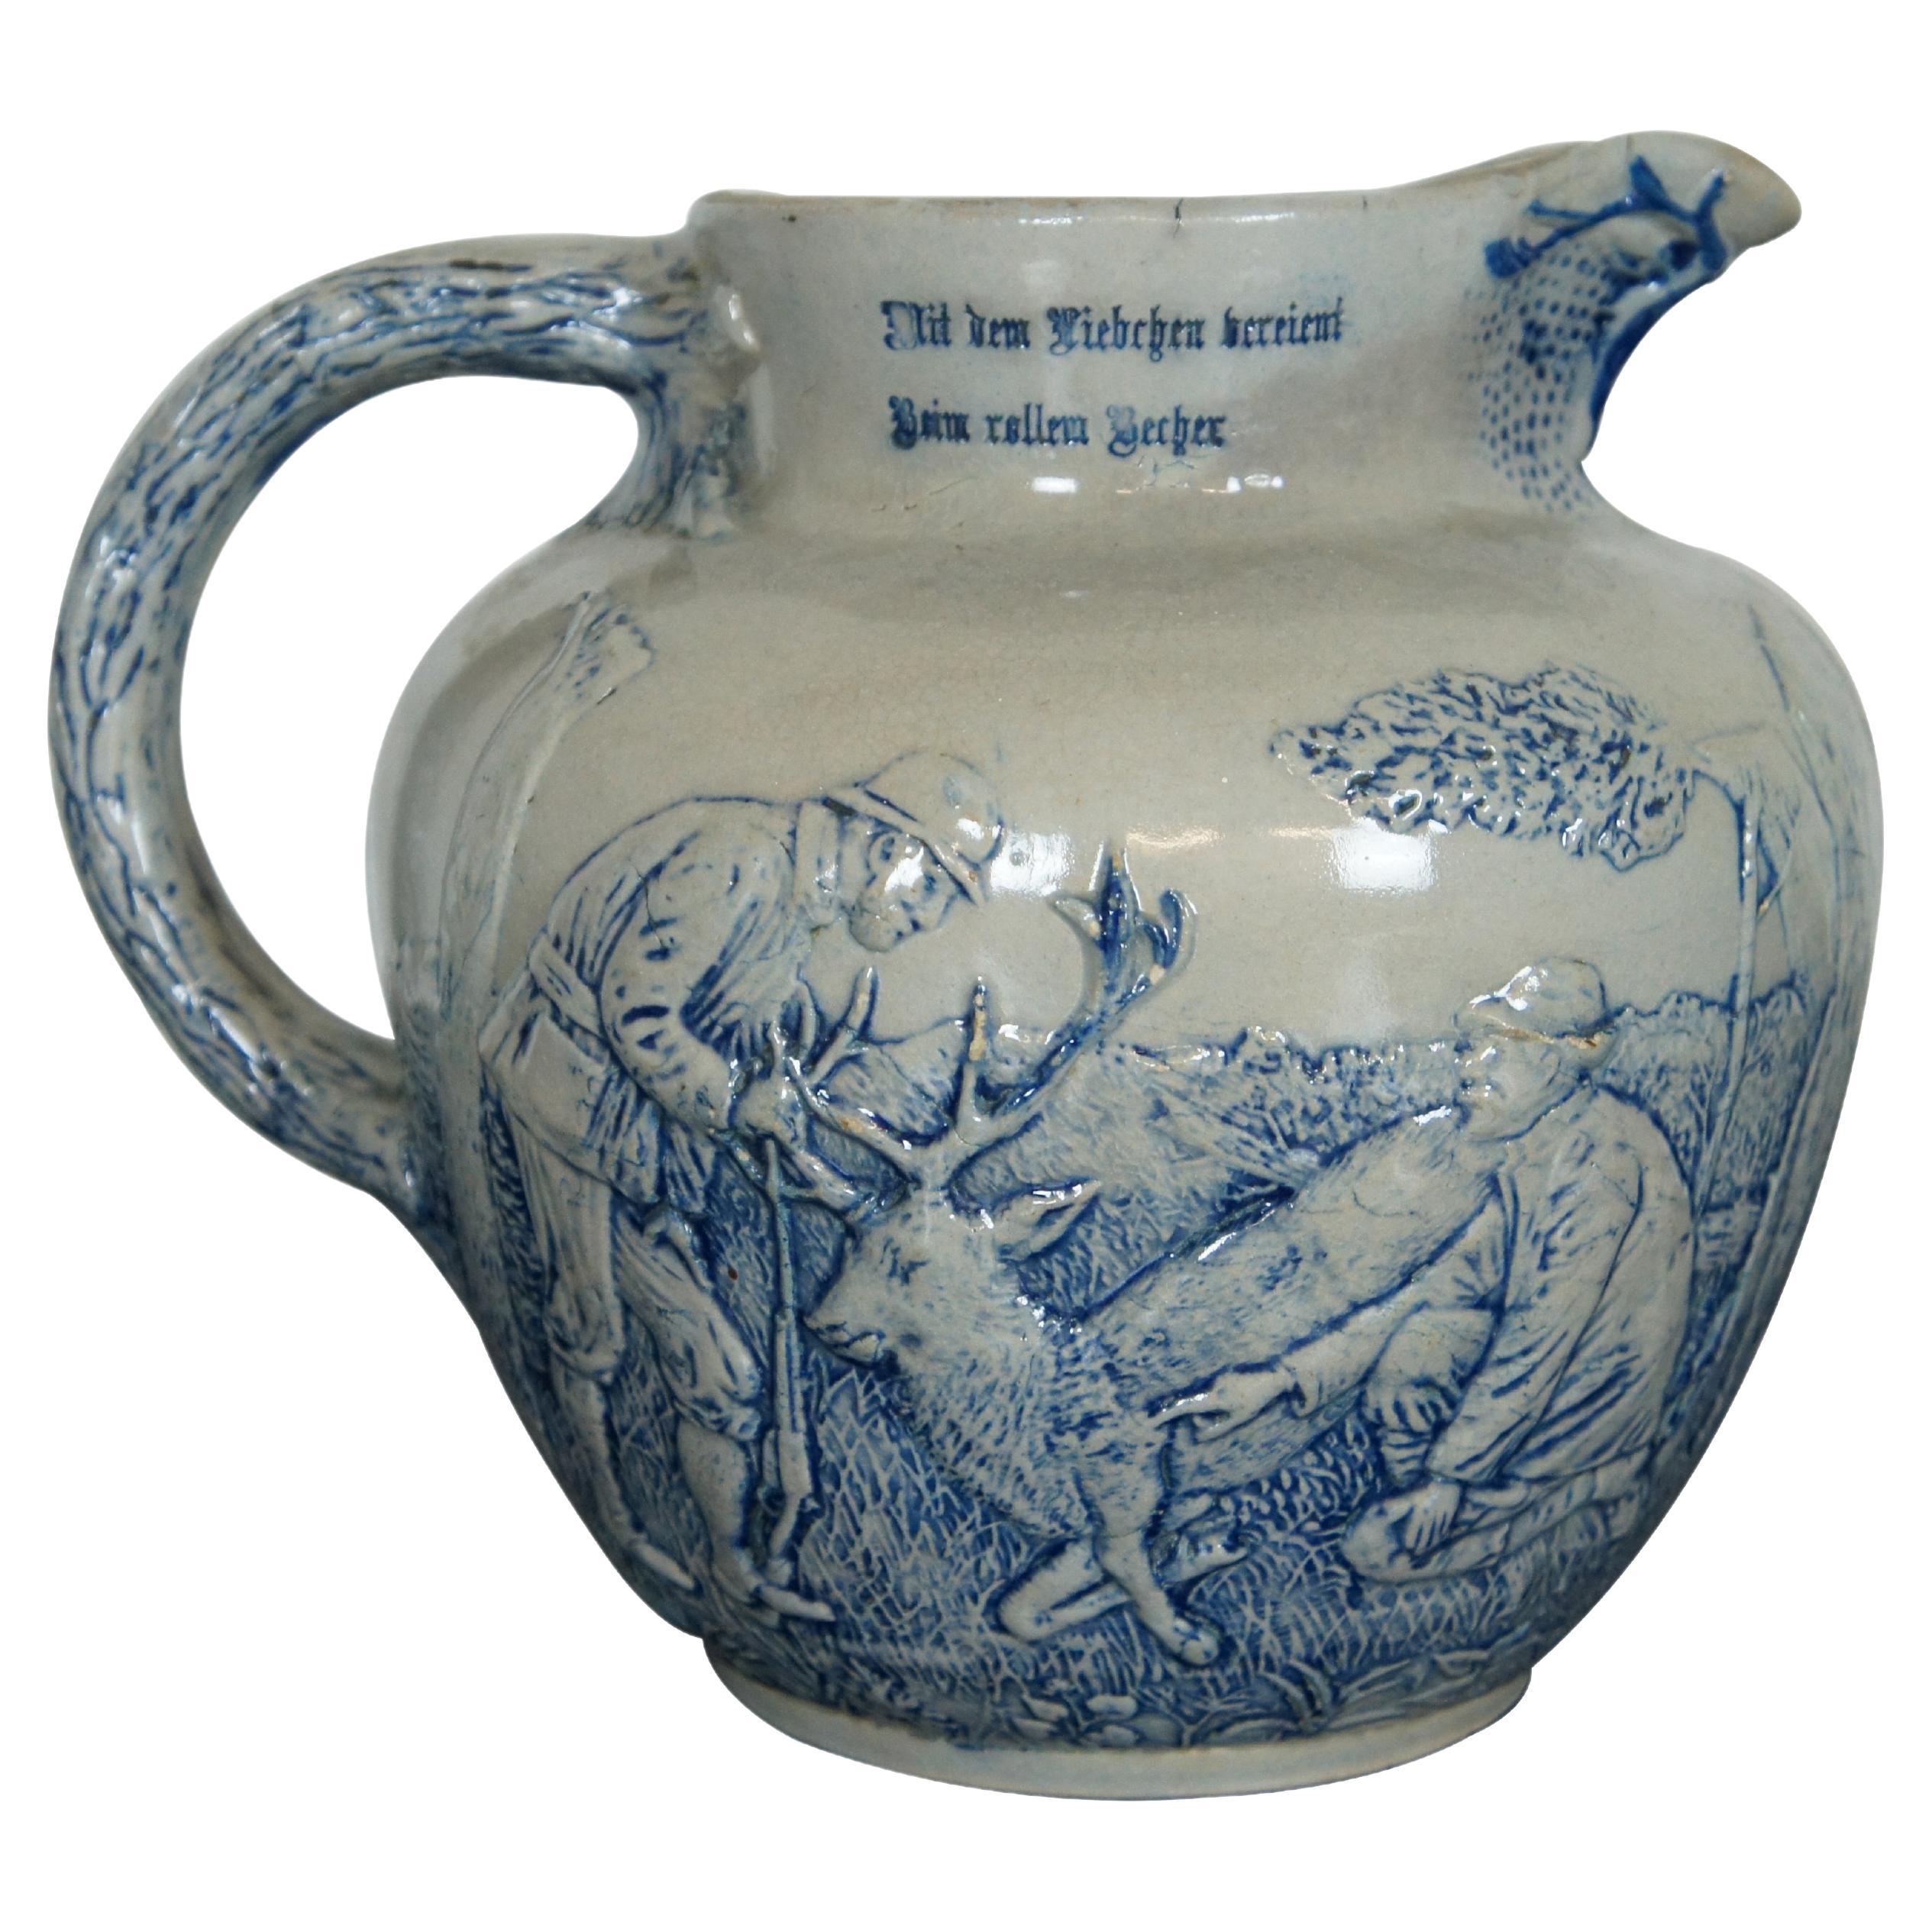 Antique 19ème siècle Whites Utica Stoneware Salt Glaze Stag Hunt Pitcher Ewer 9"